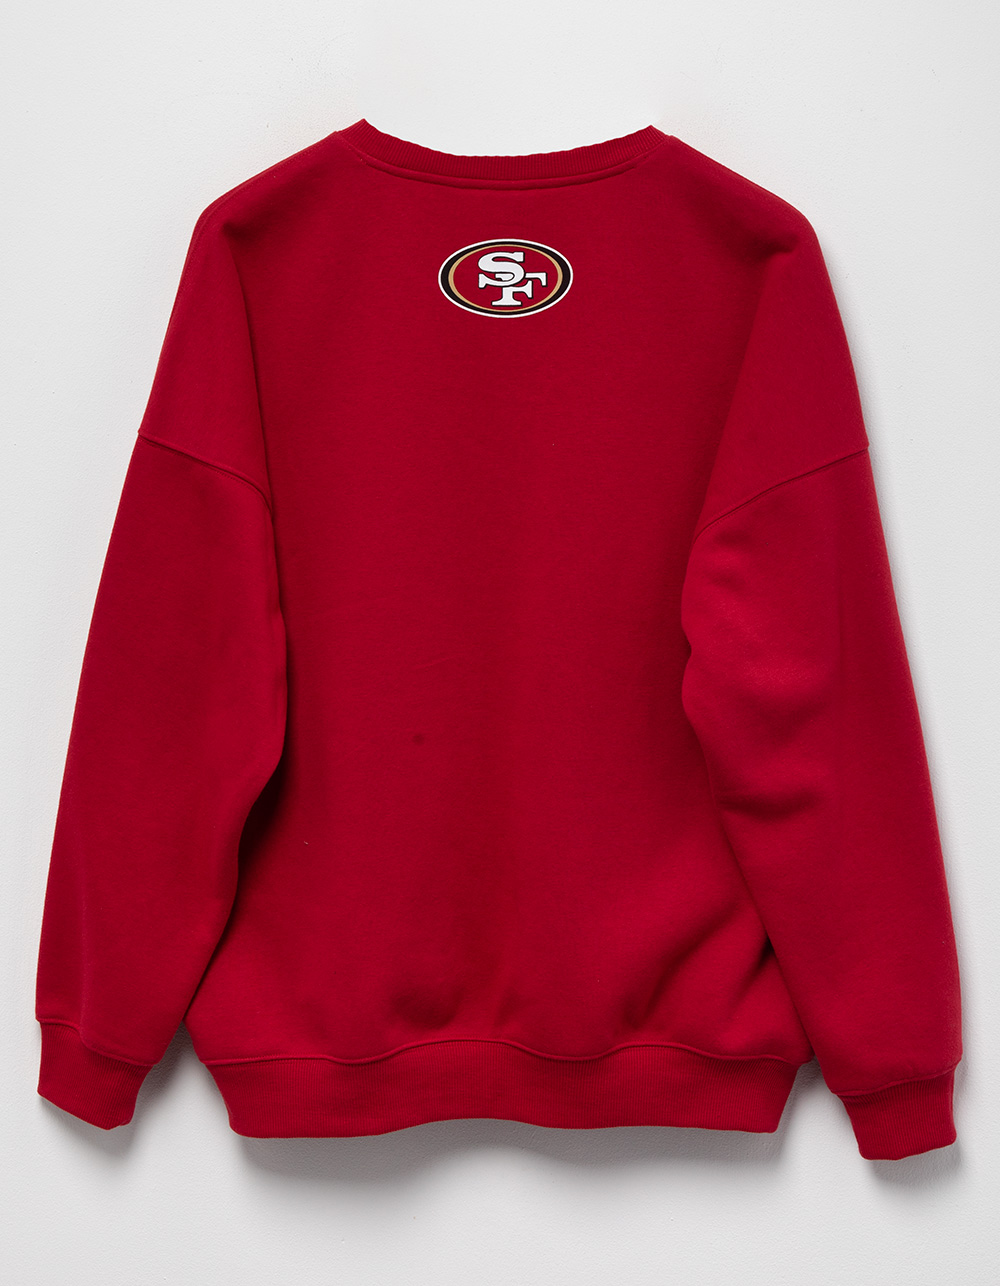 NFL San Francisco 49ers Embroidered Womens Crewneck Sweatshirt